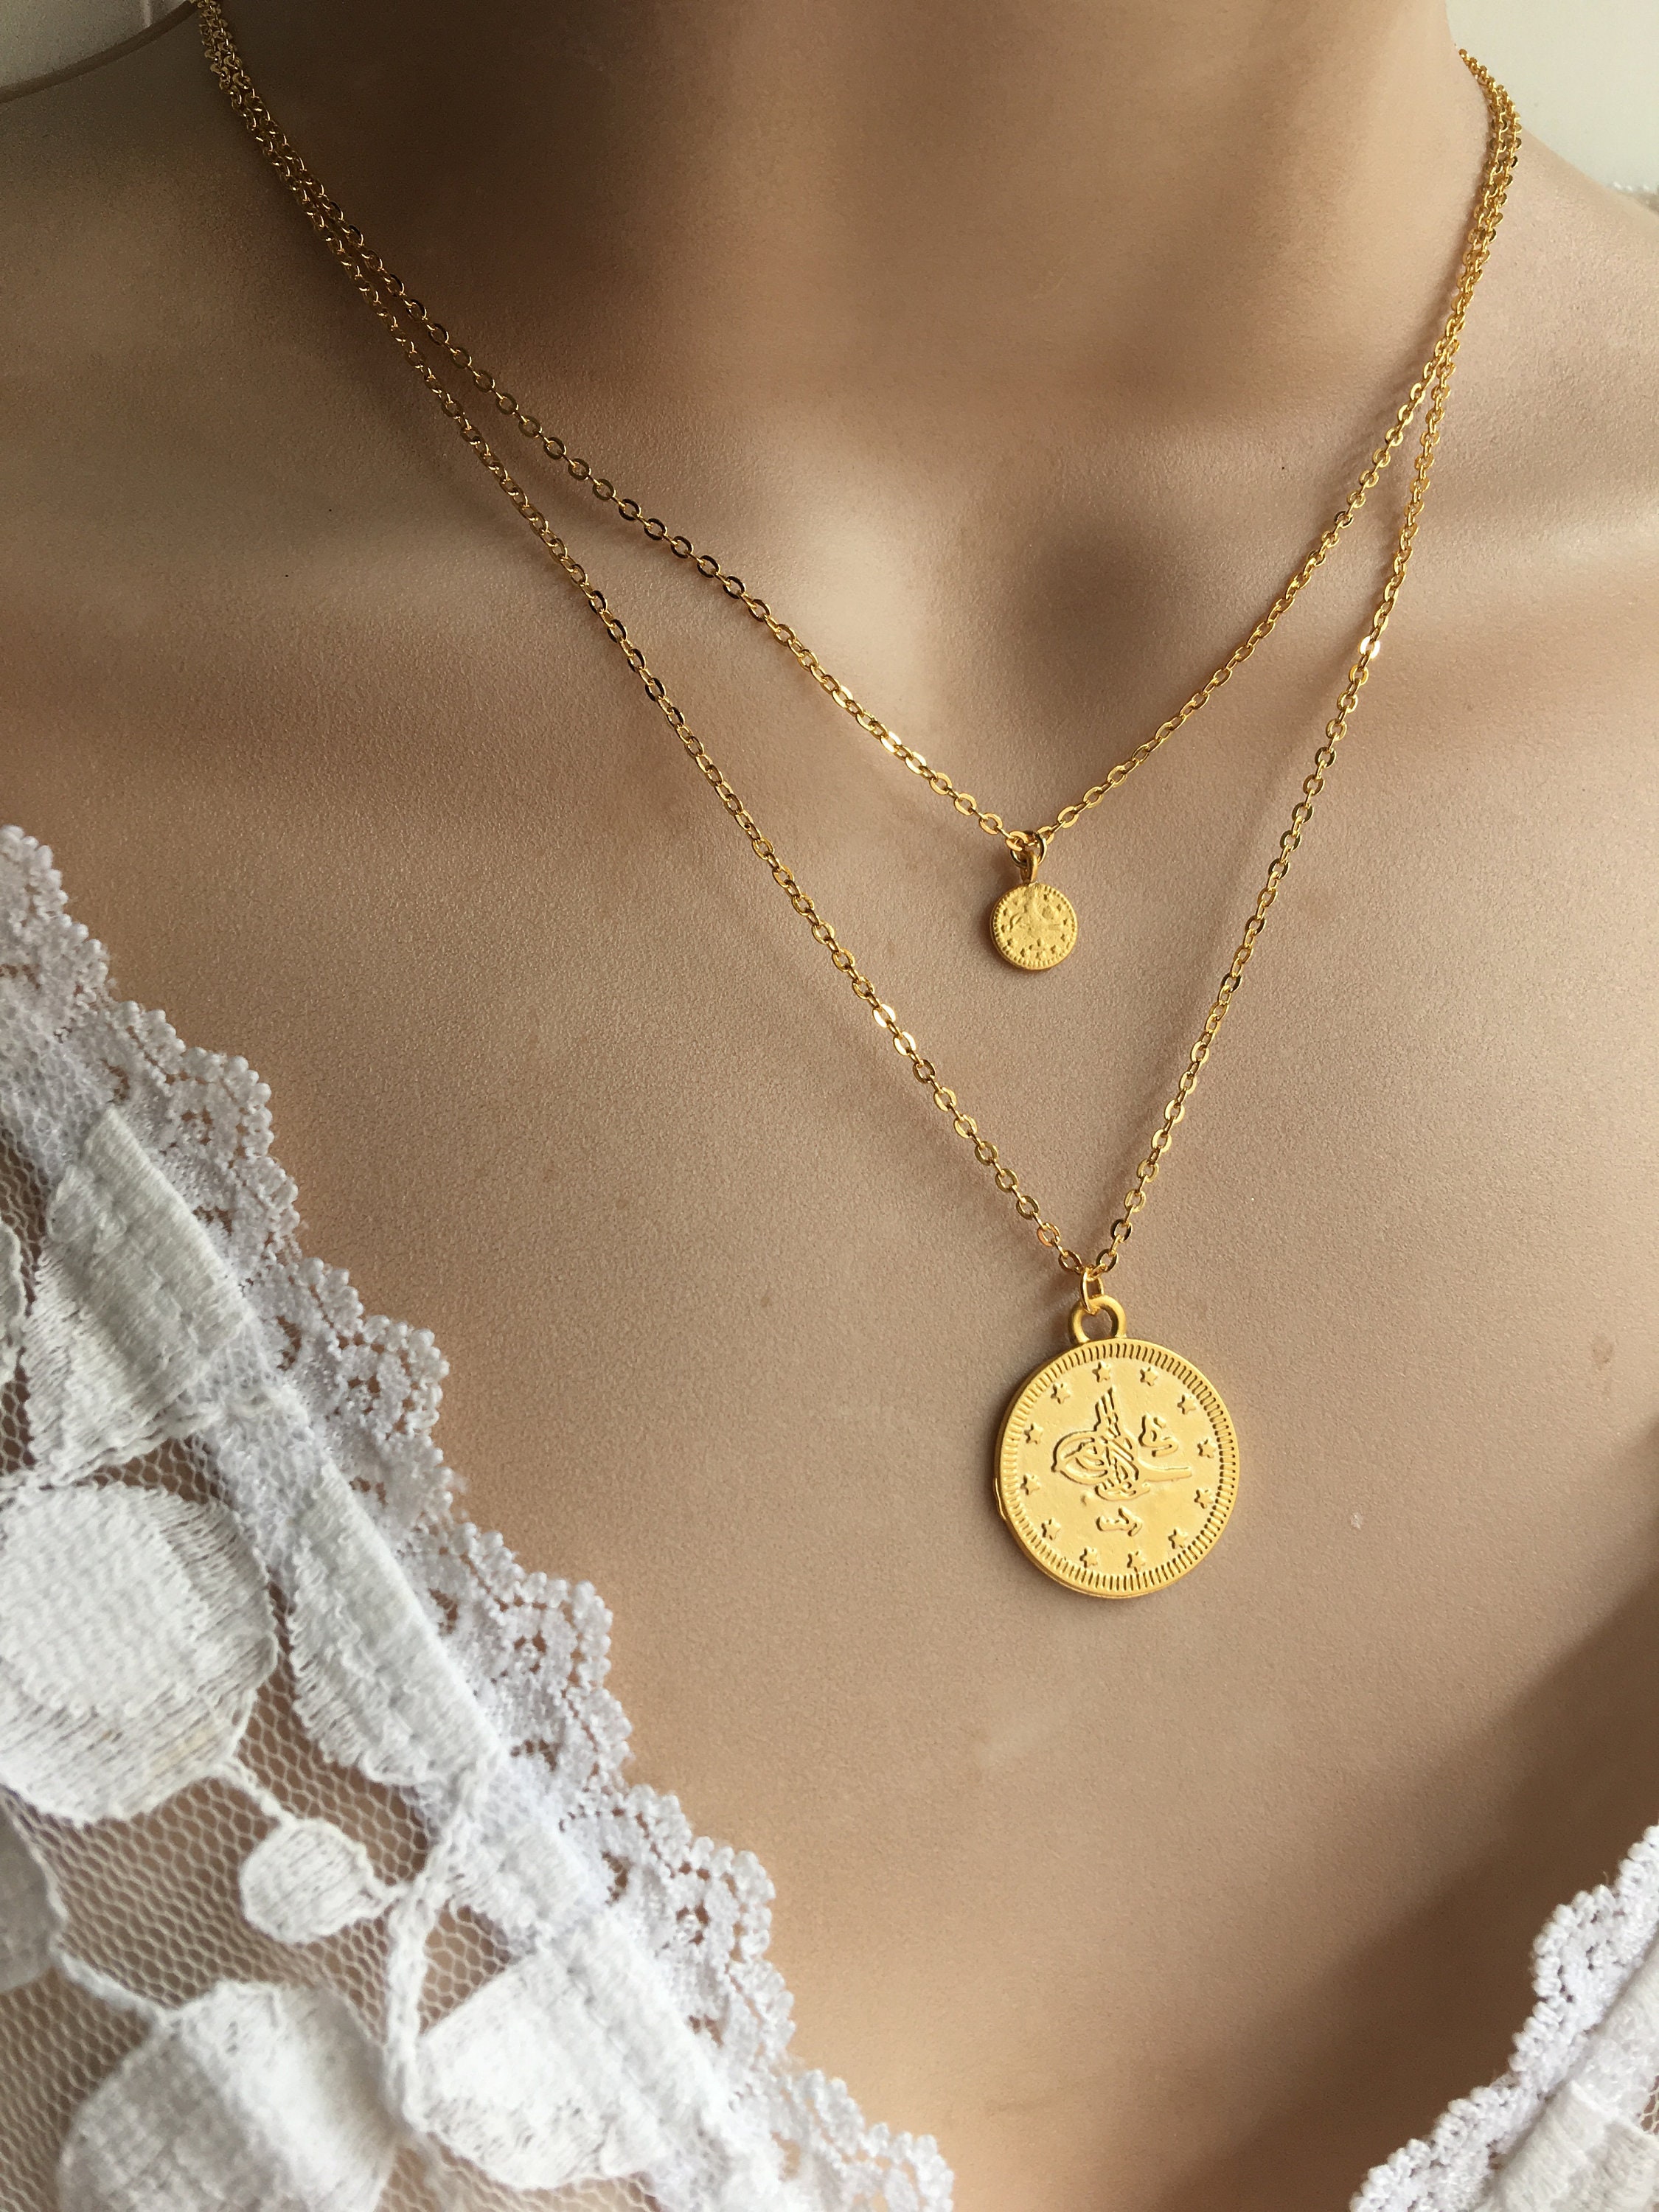 Gold Coin Necklace Set / Ottoman Coin Necklace / Turkish Coin